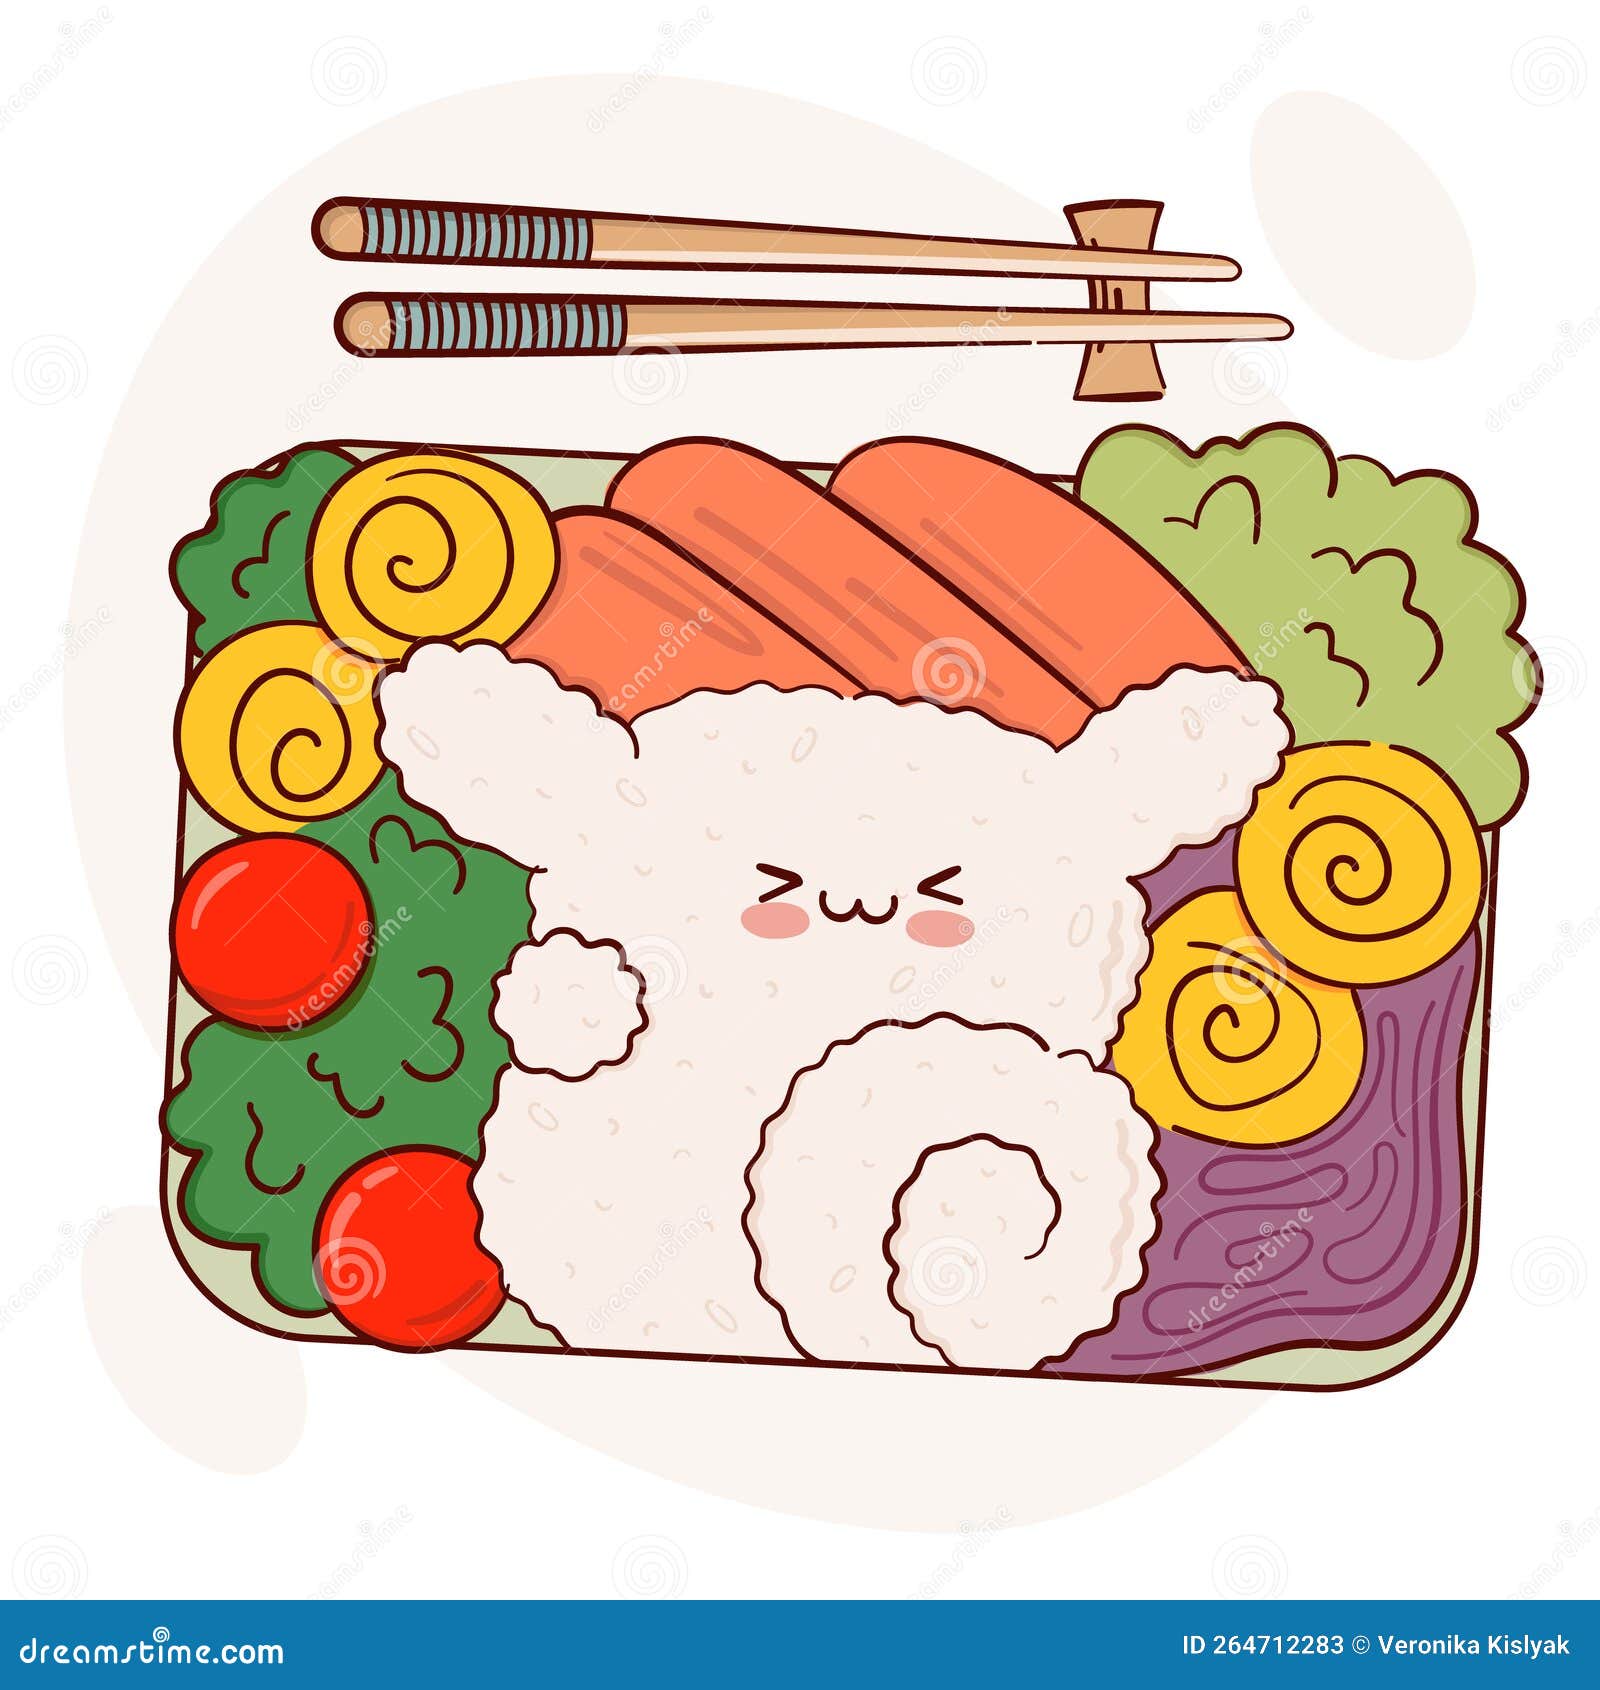 Cute Bento Box - No Background